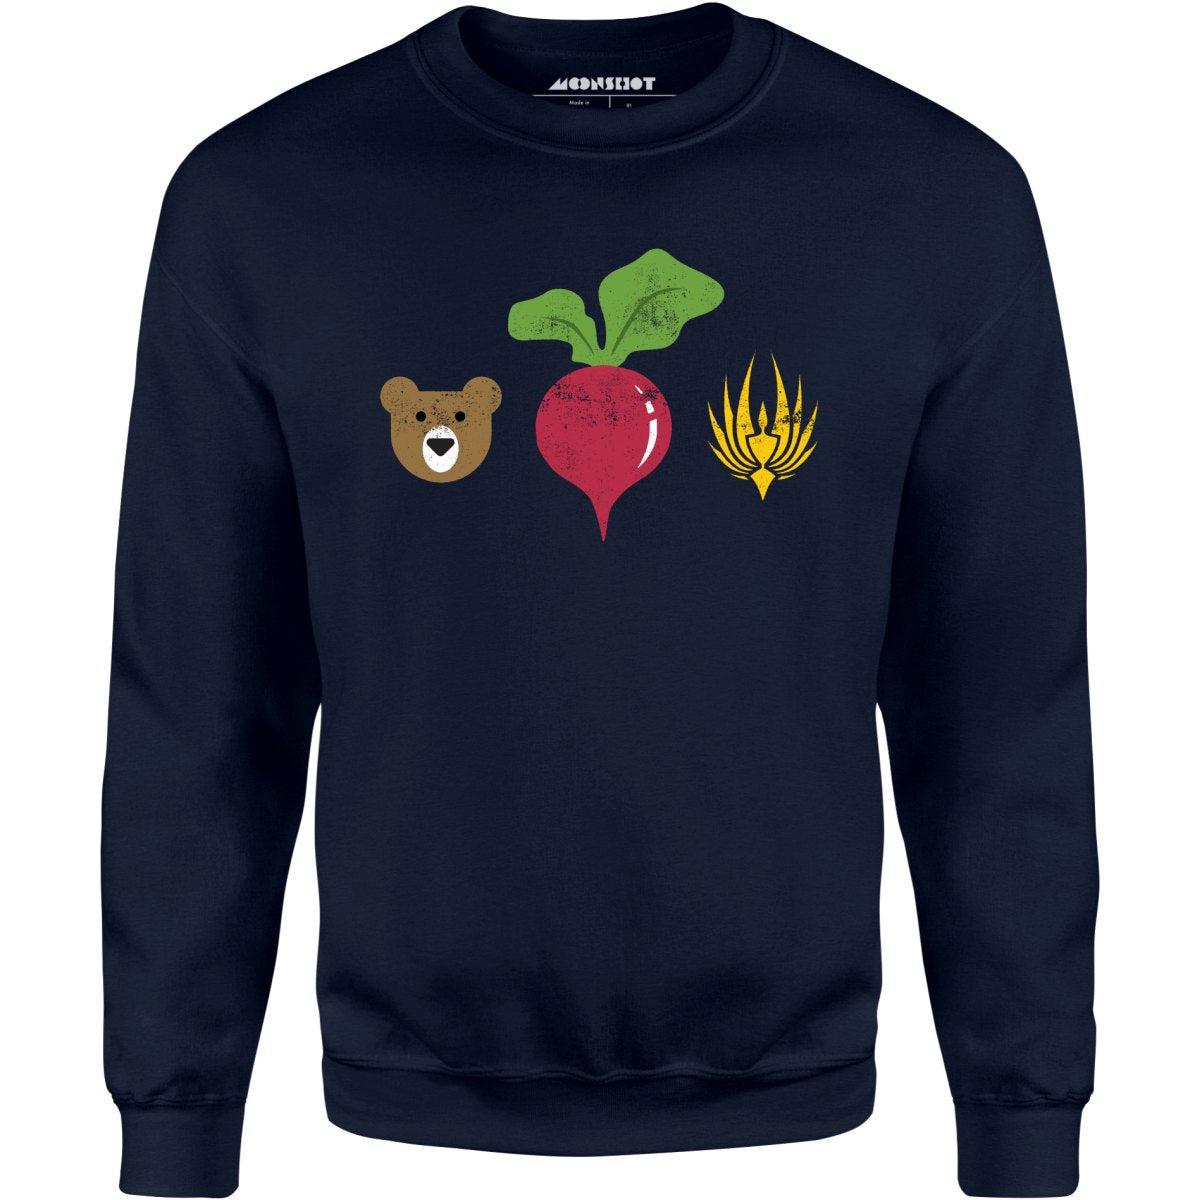 Bears Beets Battlestar Galactica - Unisex Sweatshirt